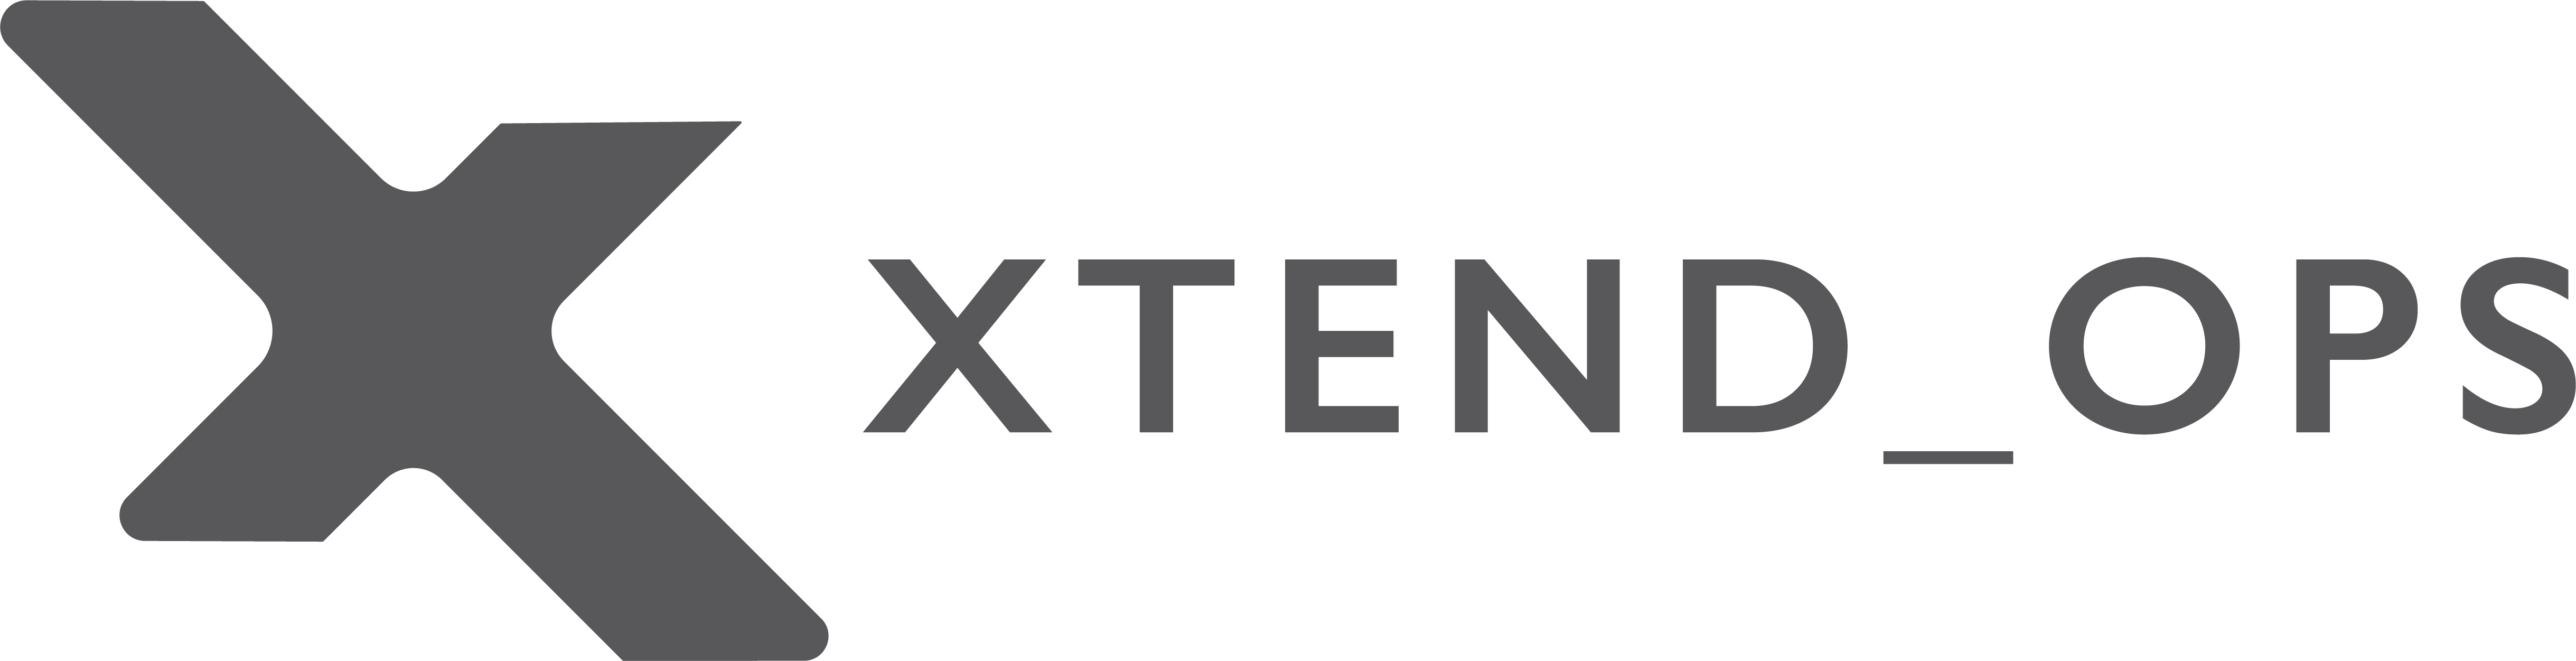 XtendOps Logo